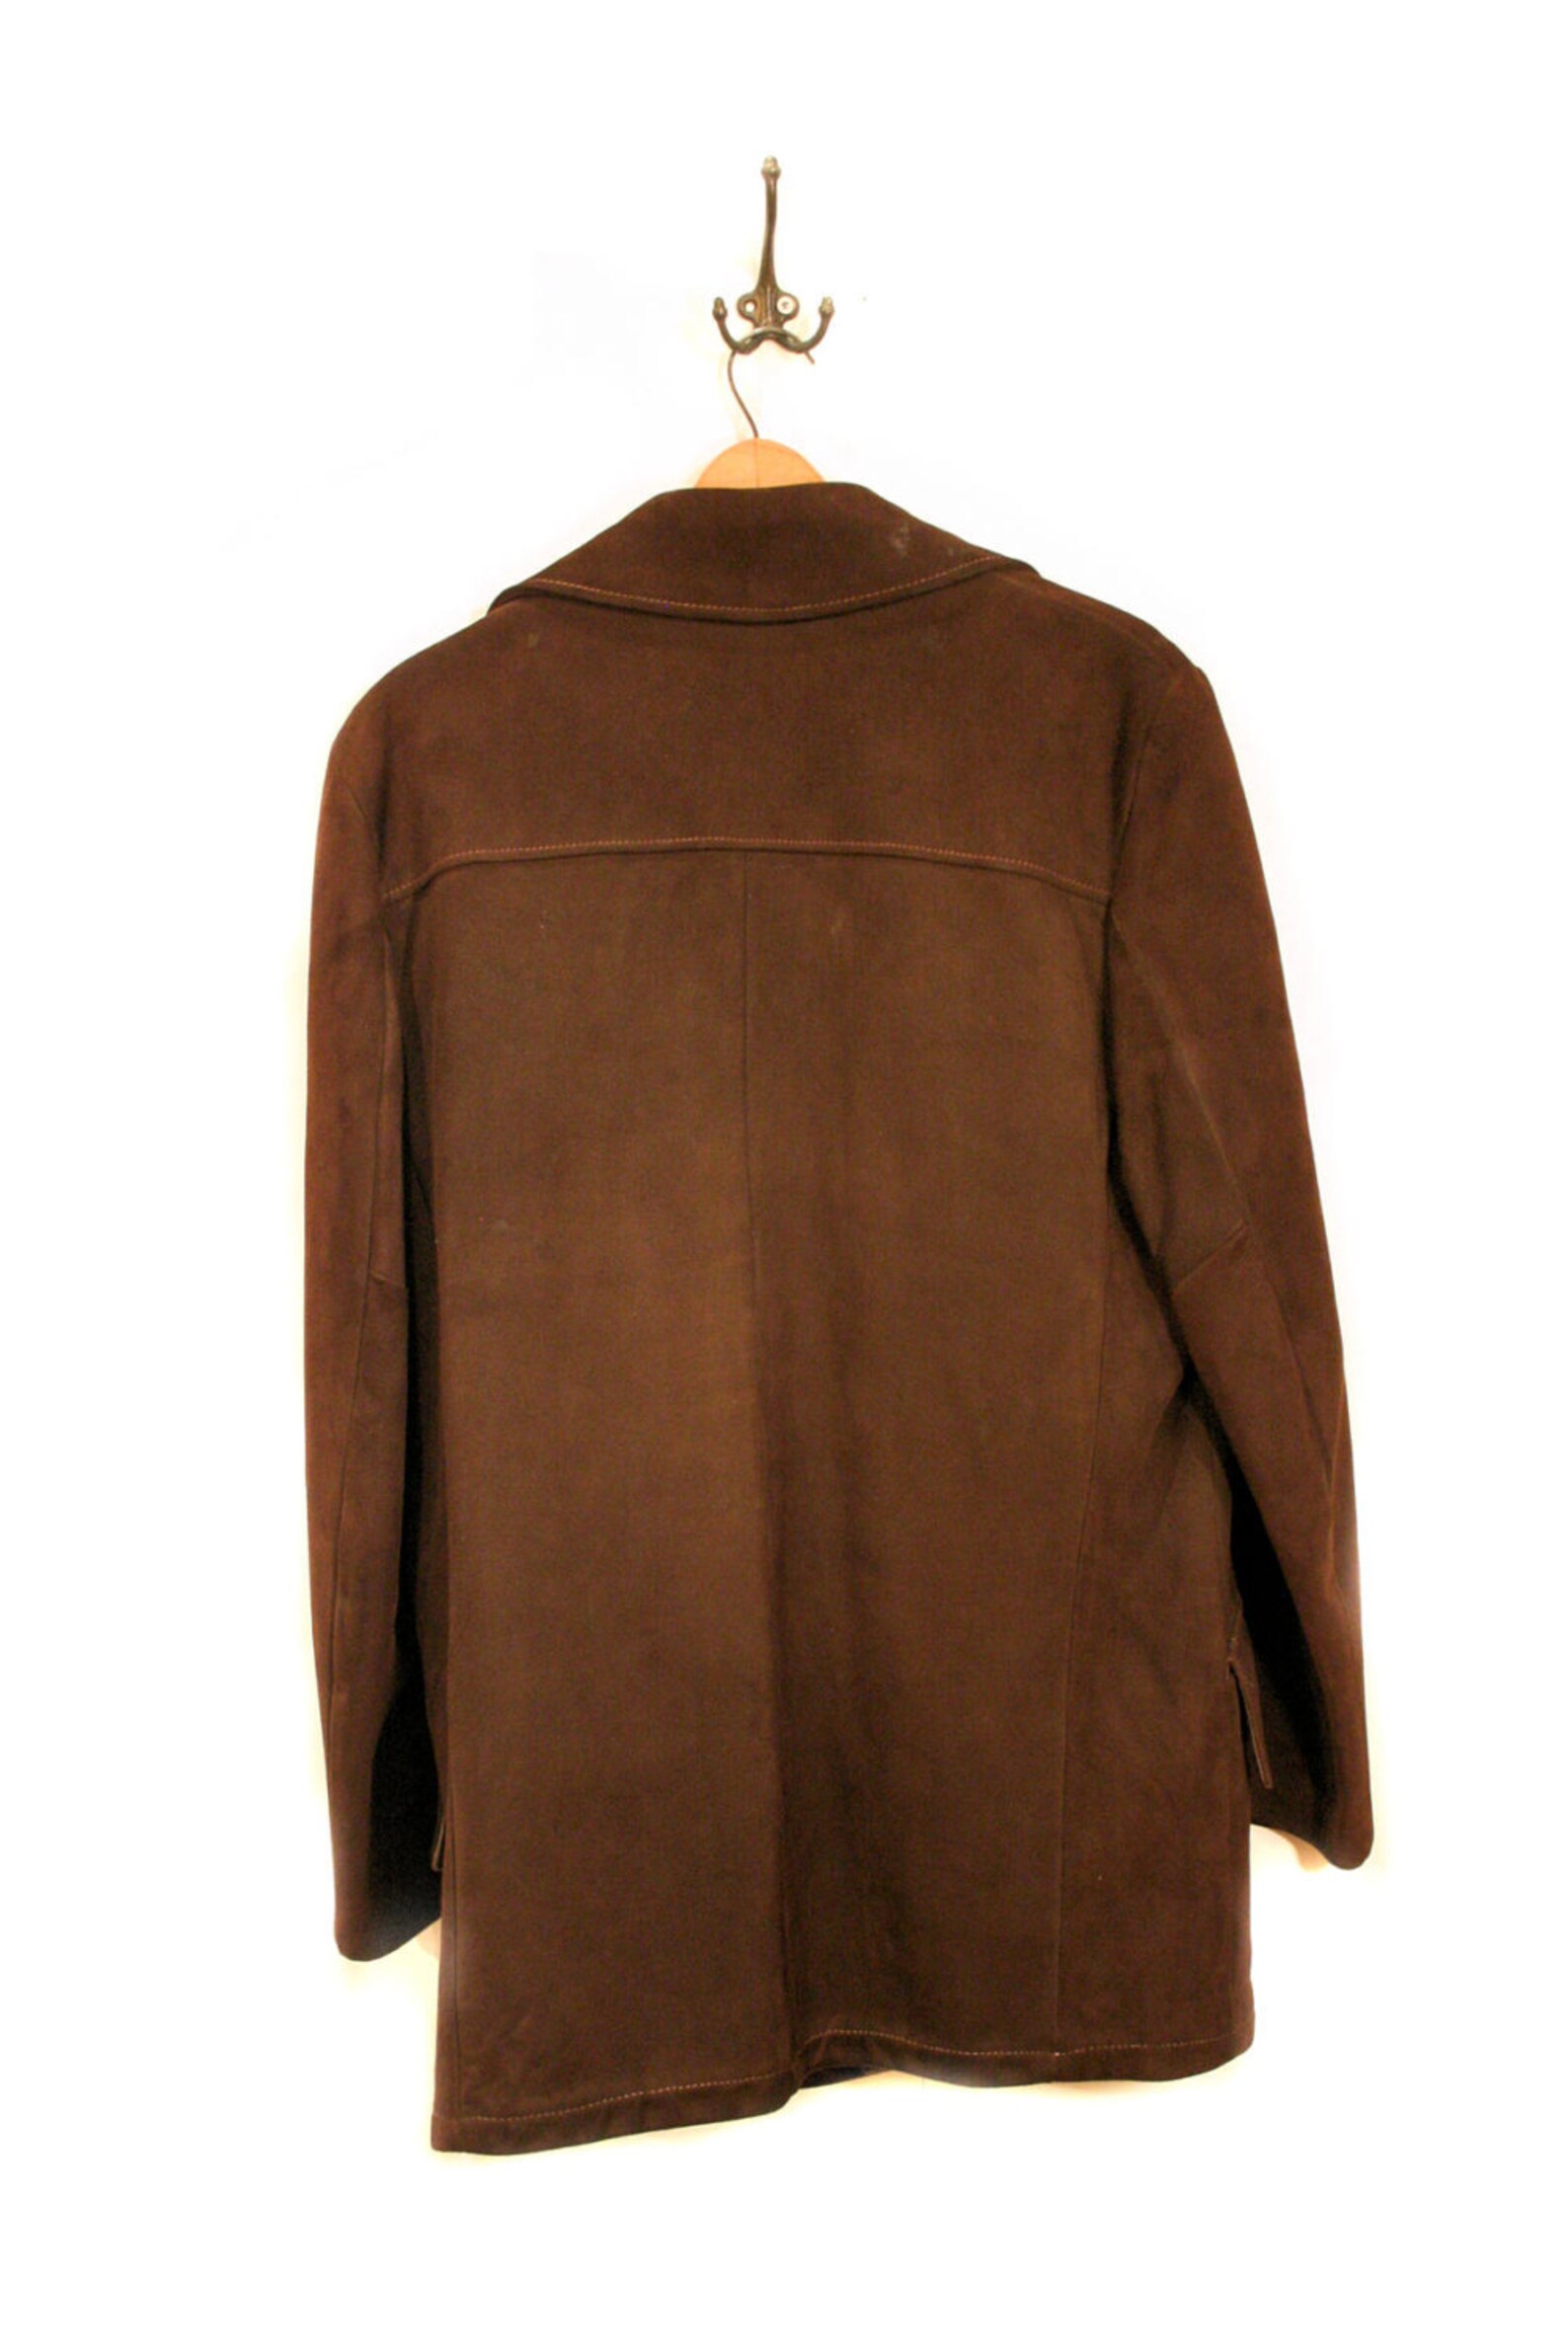 60s Suede Car Coat Men's Vintage Dark Brown Leather Jacket | Etsy